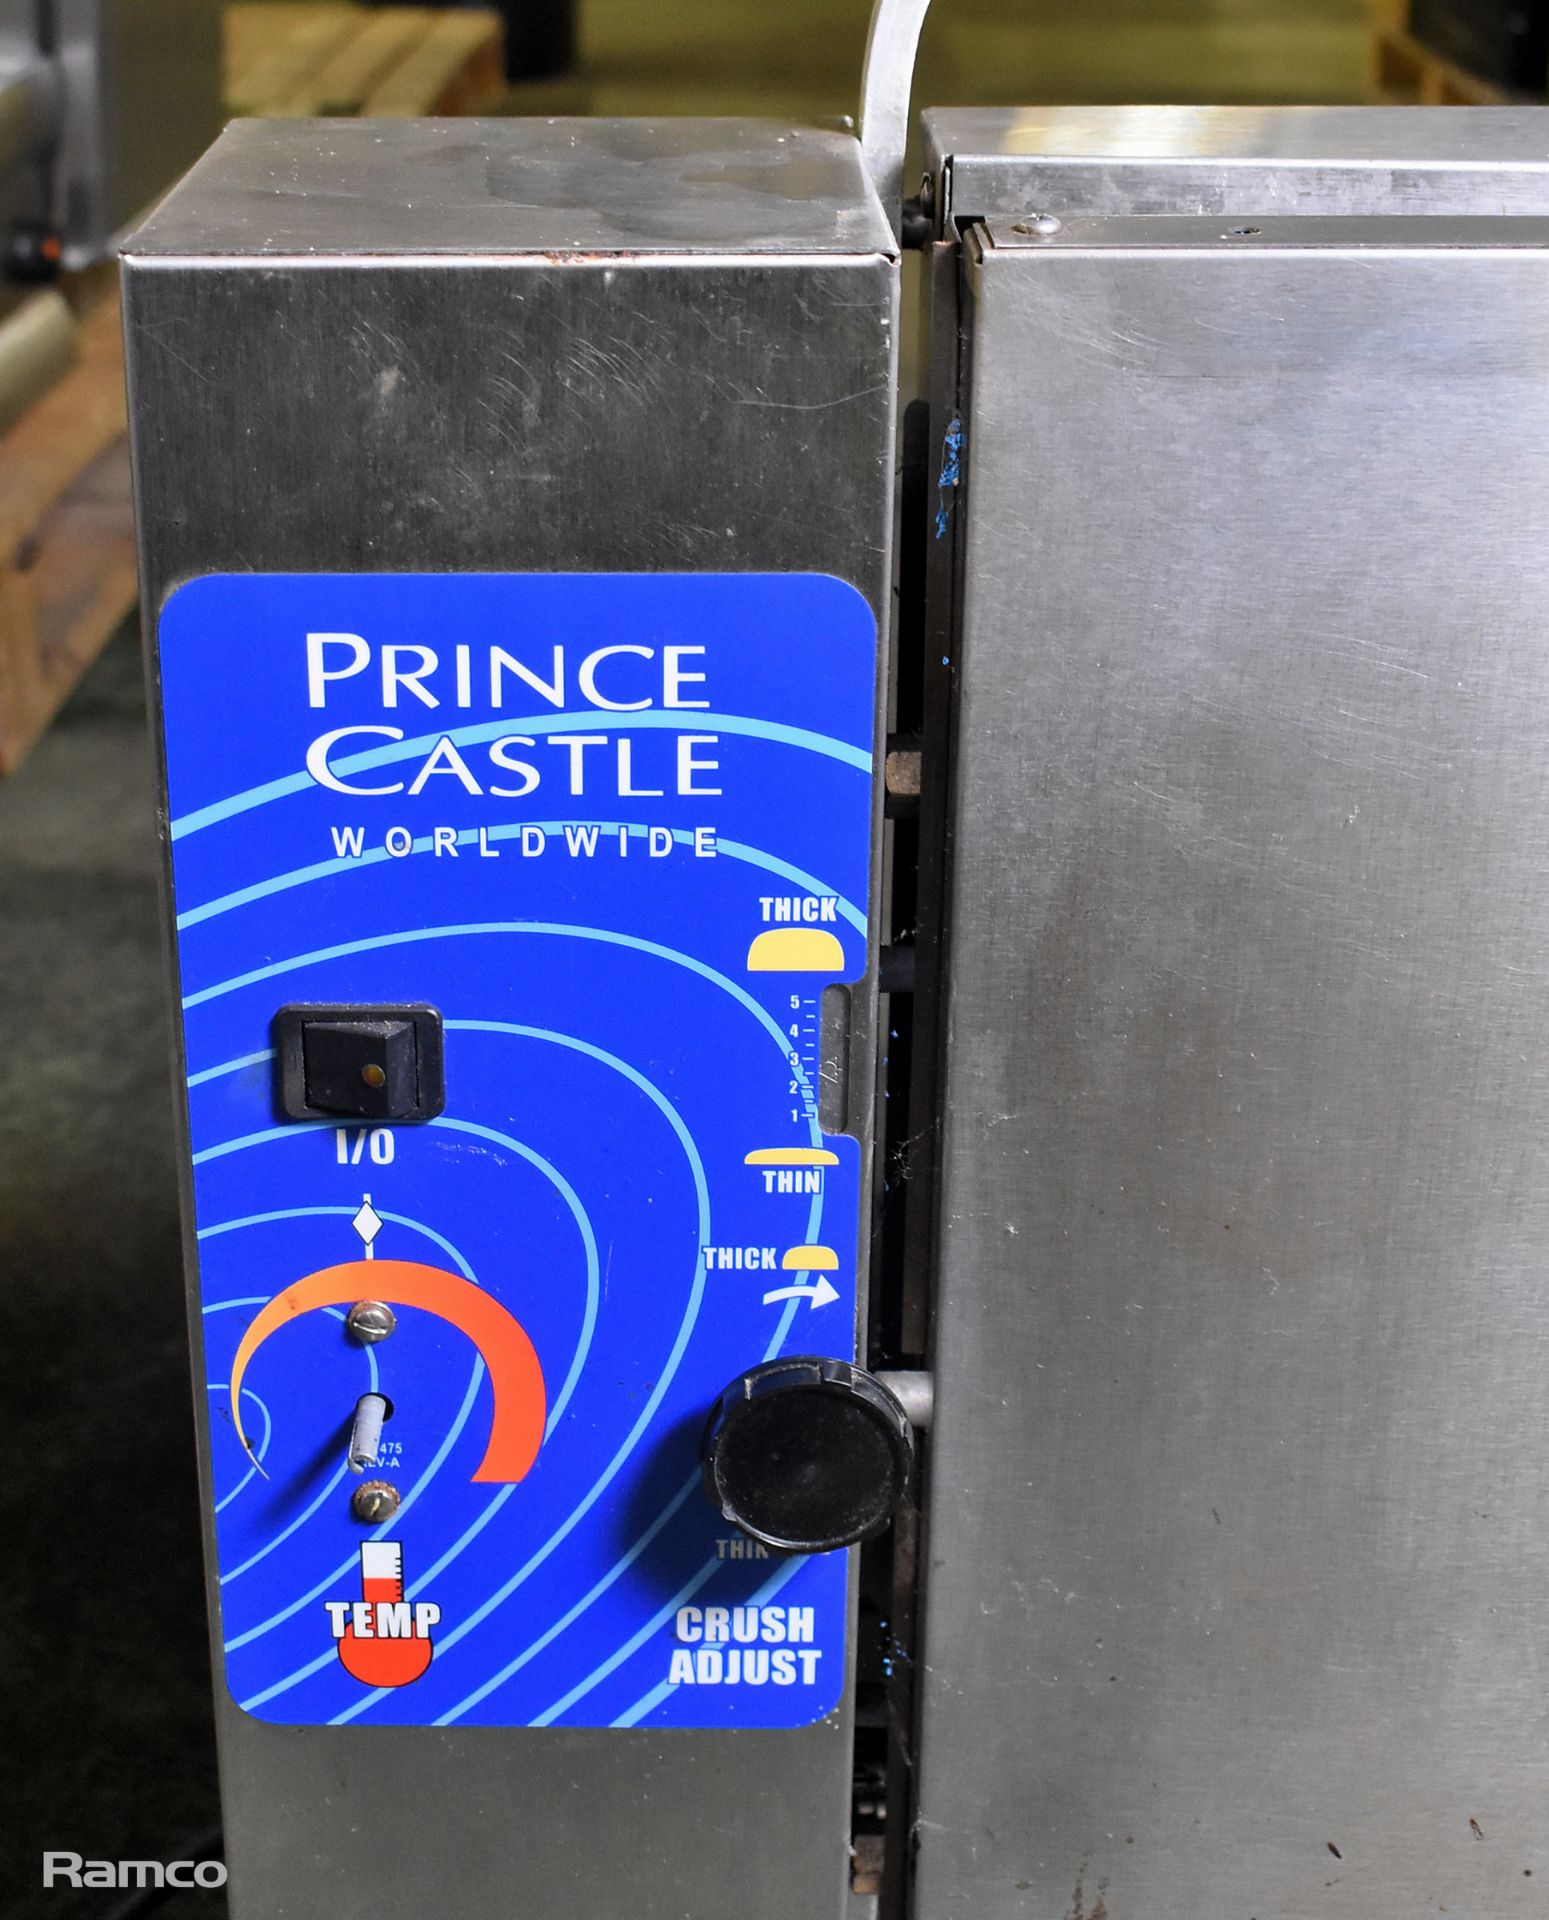 Prince Castle 297-T9FGB stainless steel slimline bun toaster - Image 2 of 8